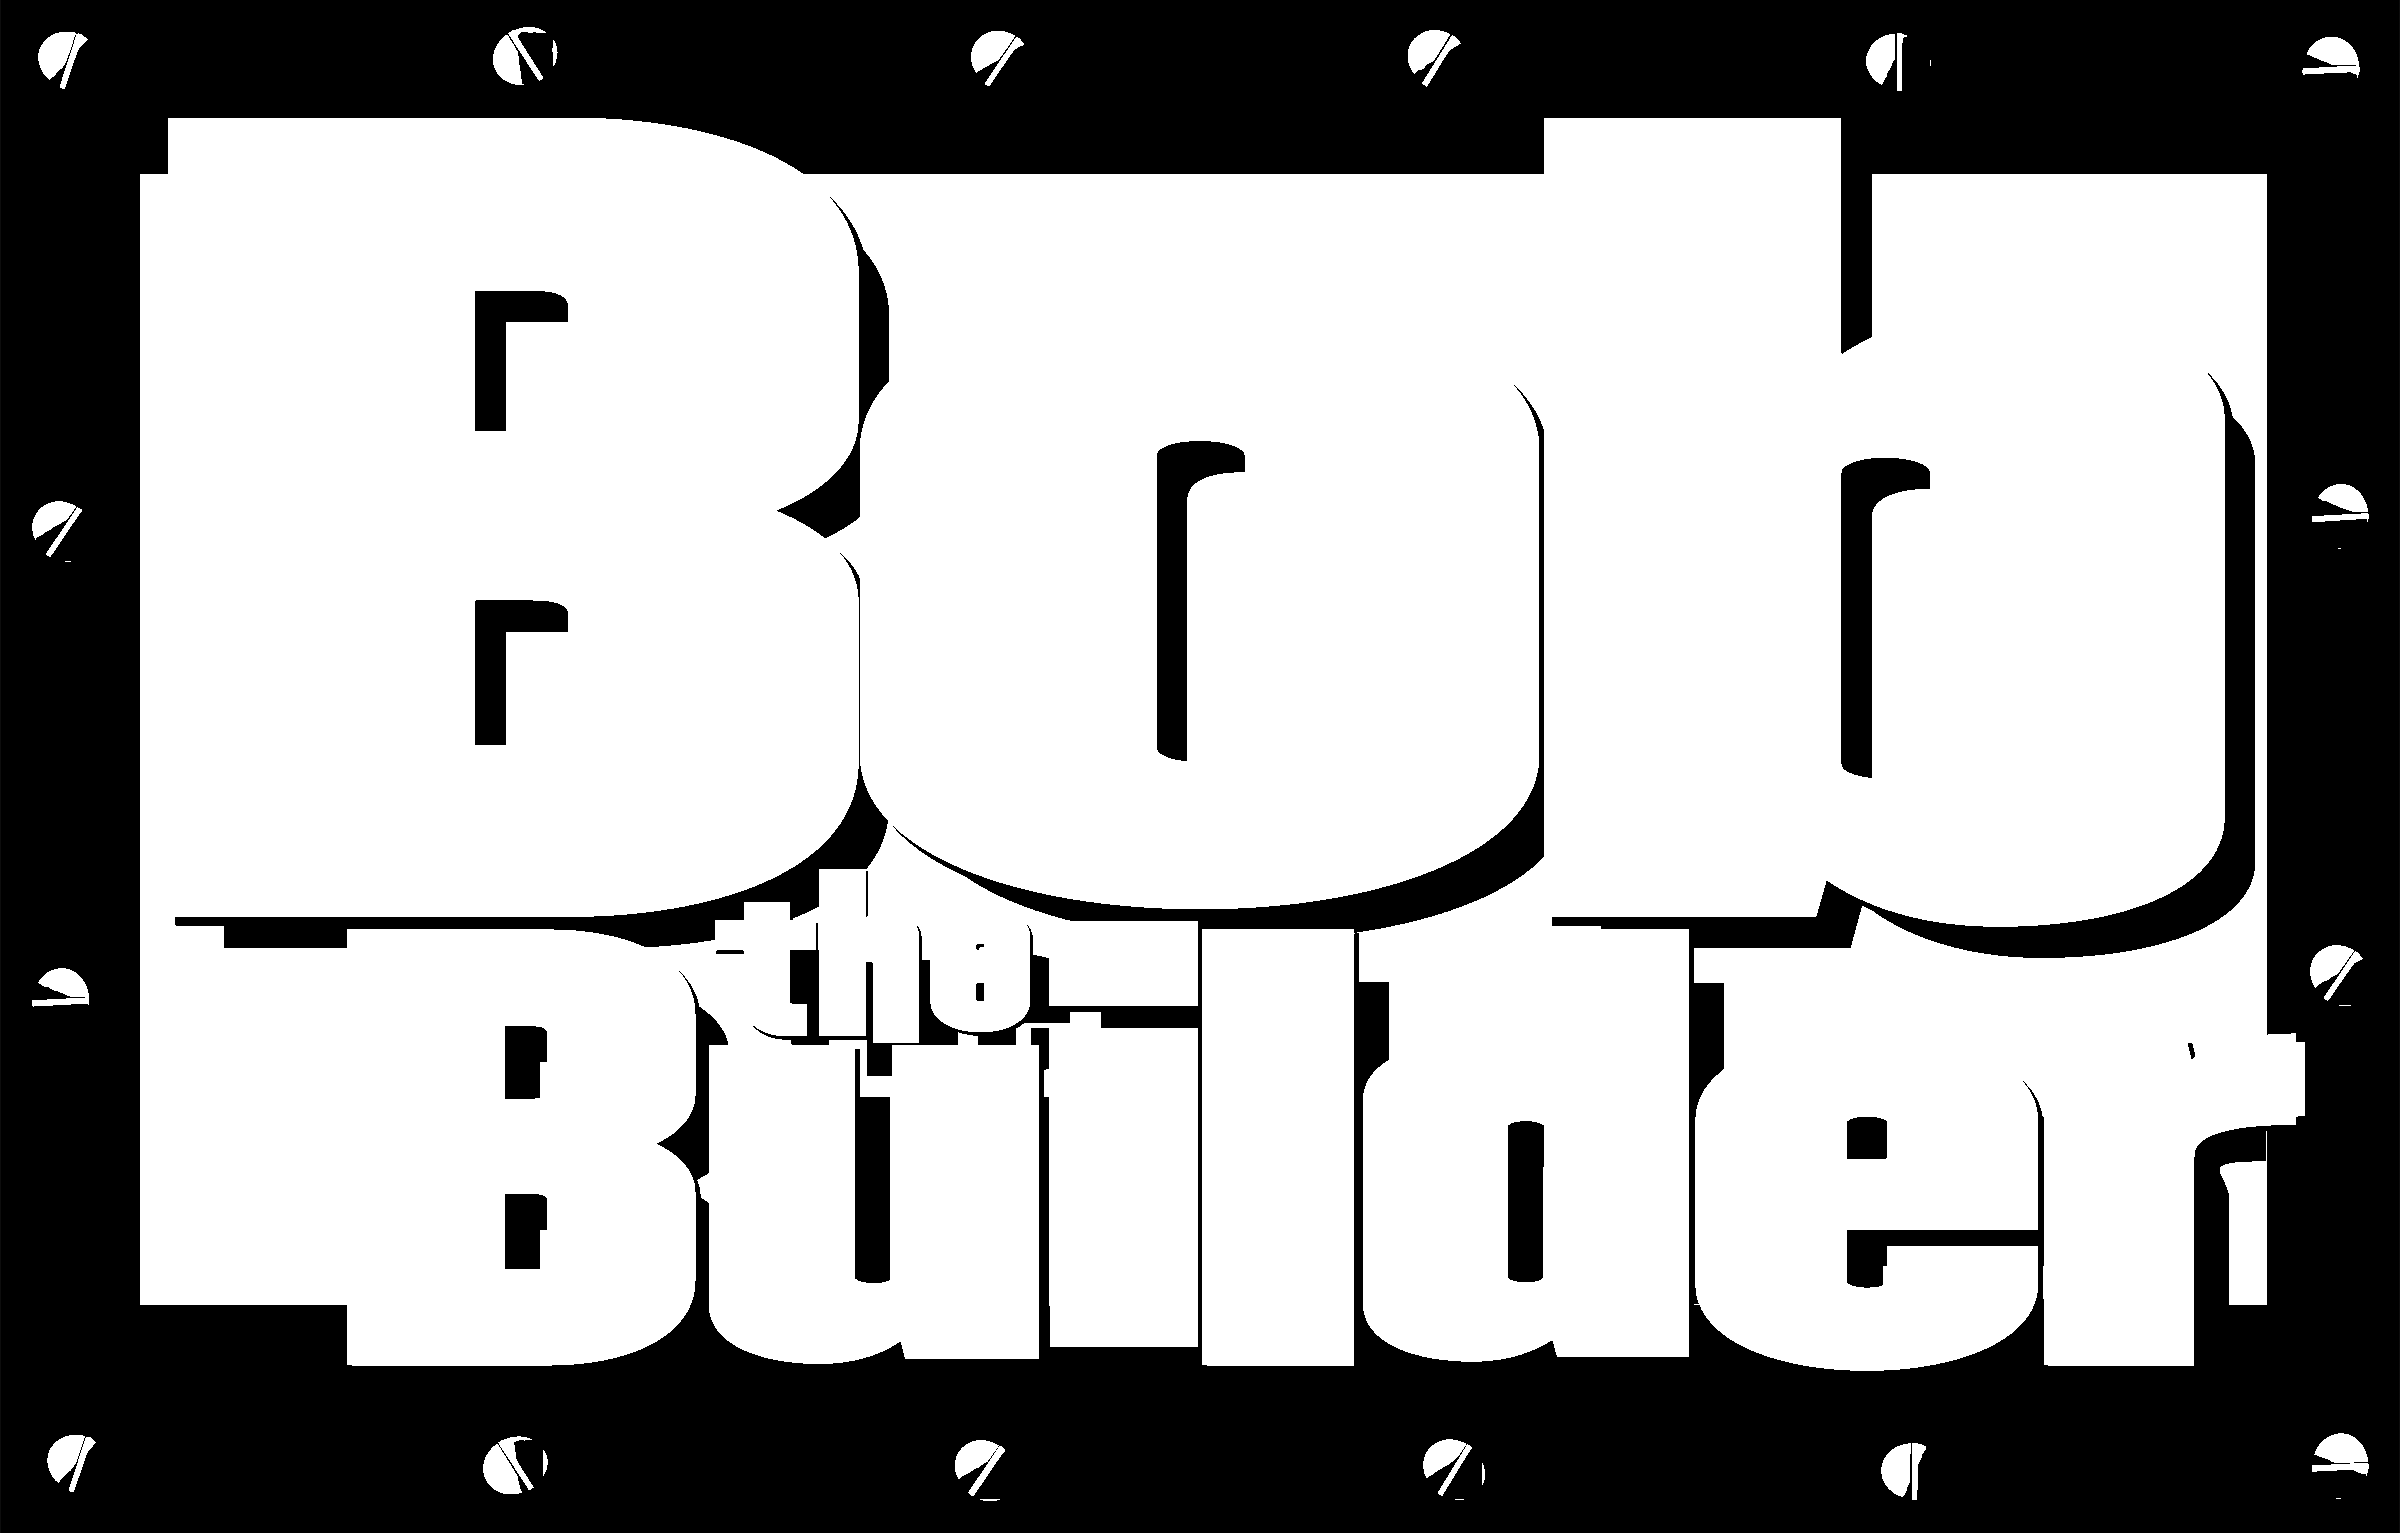 Bob the Builder Logo - Bob the Builder Logo PNG Transparent & SVG Vector - Freebie Supply